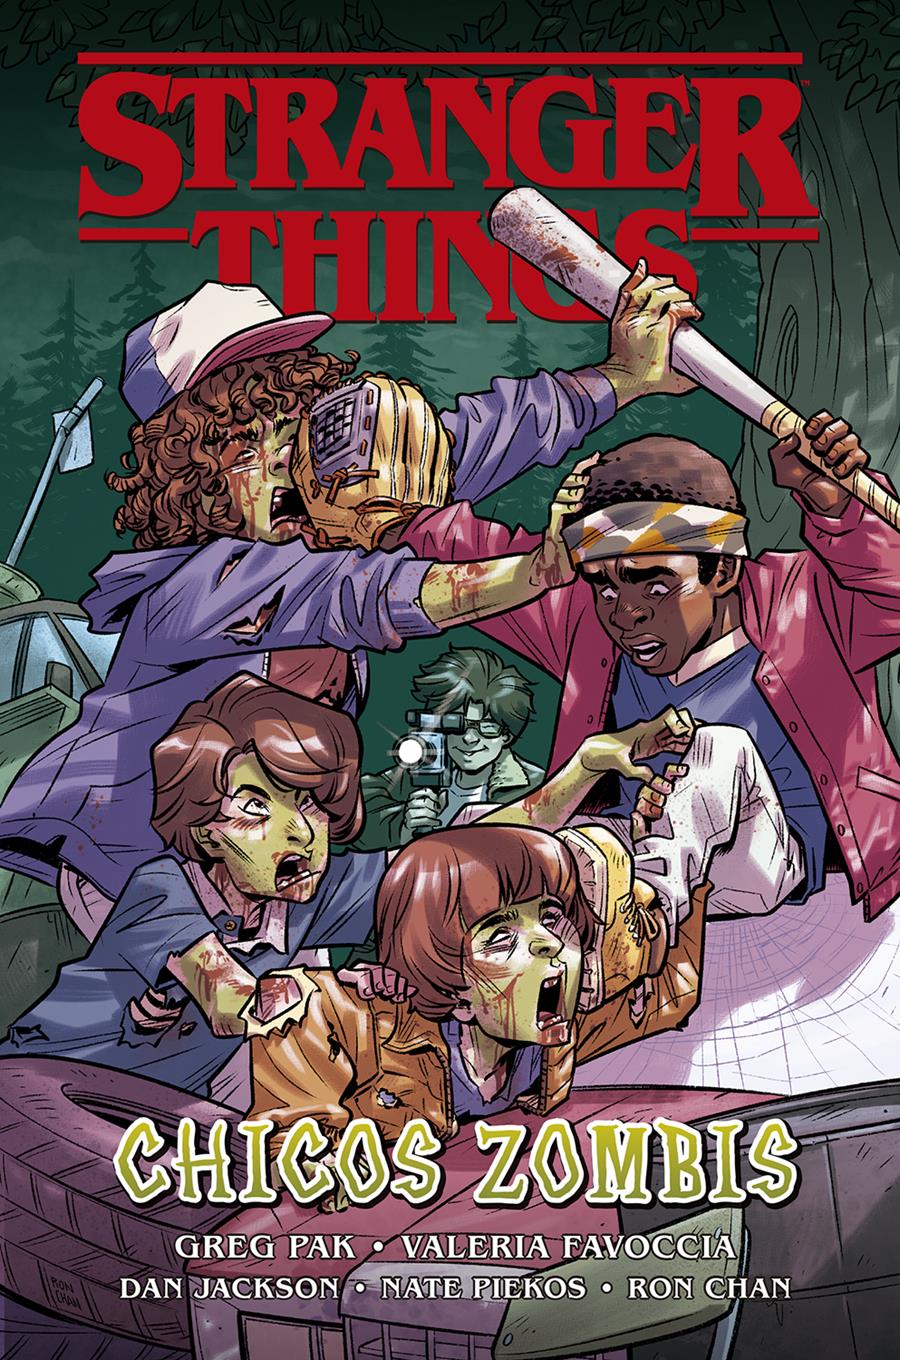 Strangers things: Chicos zombies | N0720-NOR04 | Greg Pak | Terra de Còmic - Tu tienda de cómics online especializada en cómics, manga y merchandising